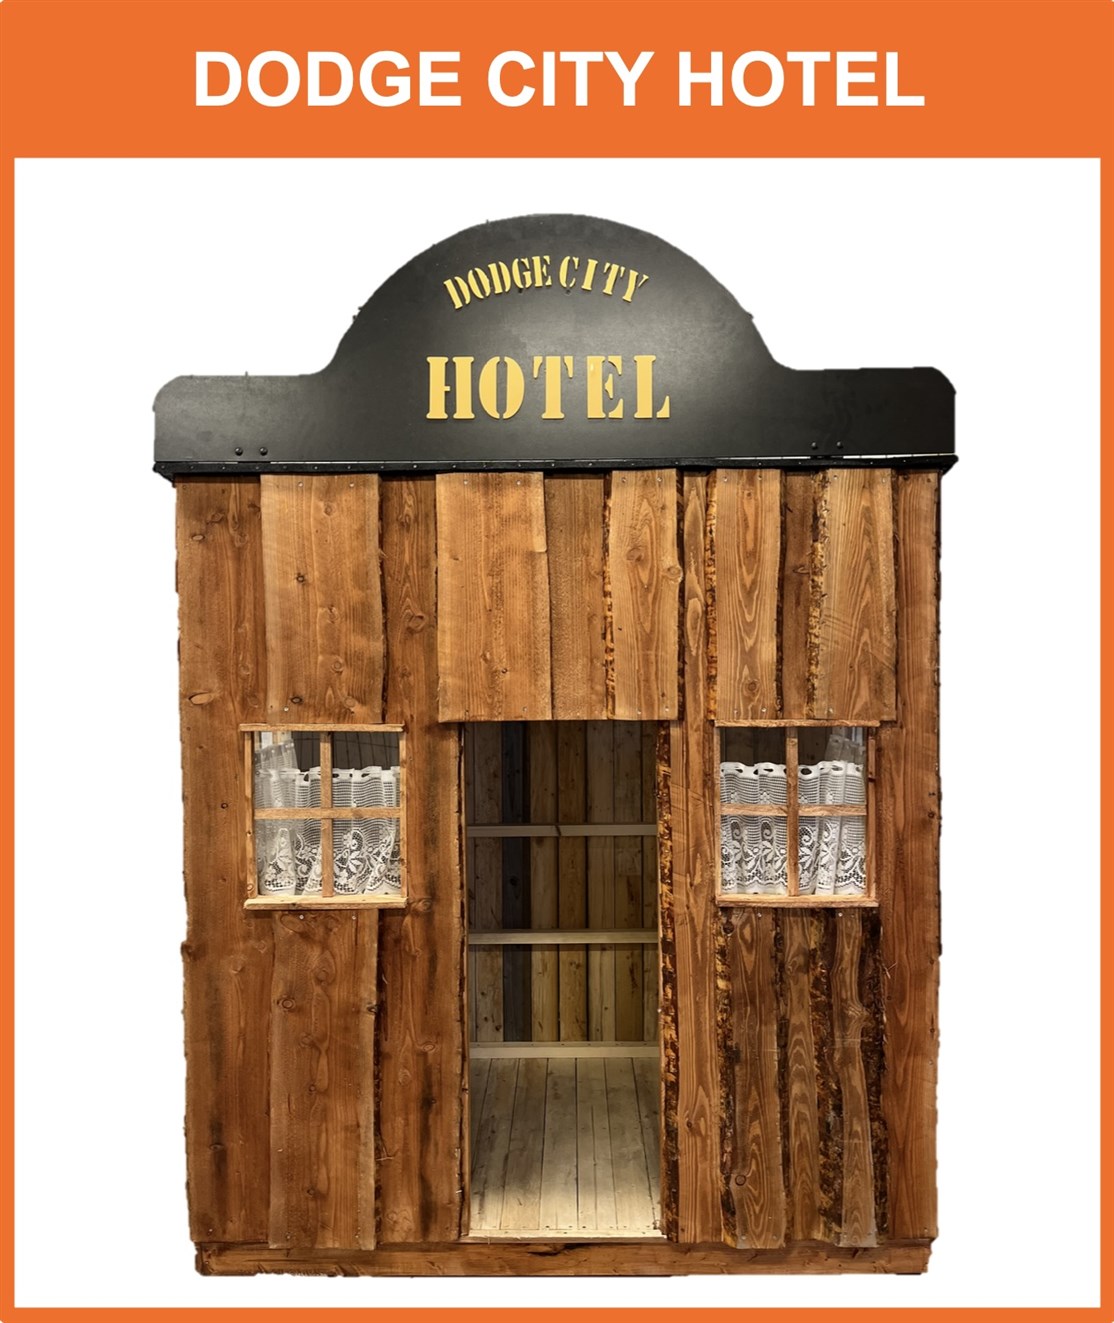 Dodge City Hotel 
Størrelse: B. 2 x H. 2 x D. 1,4 meter
*